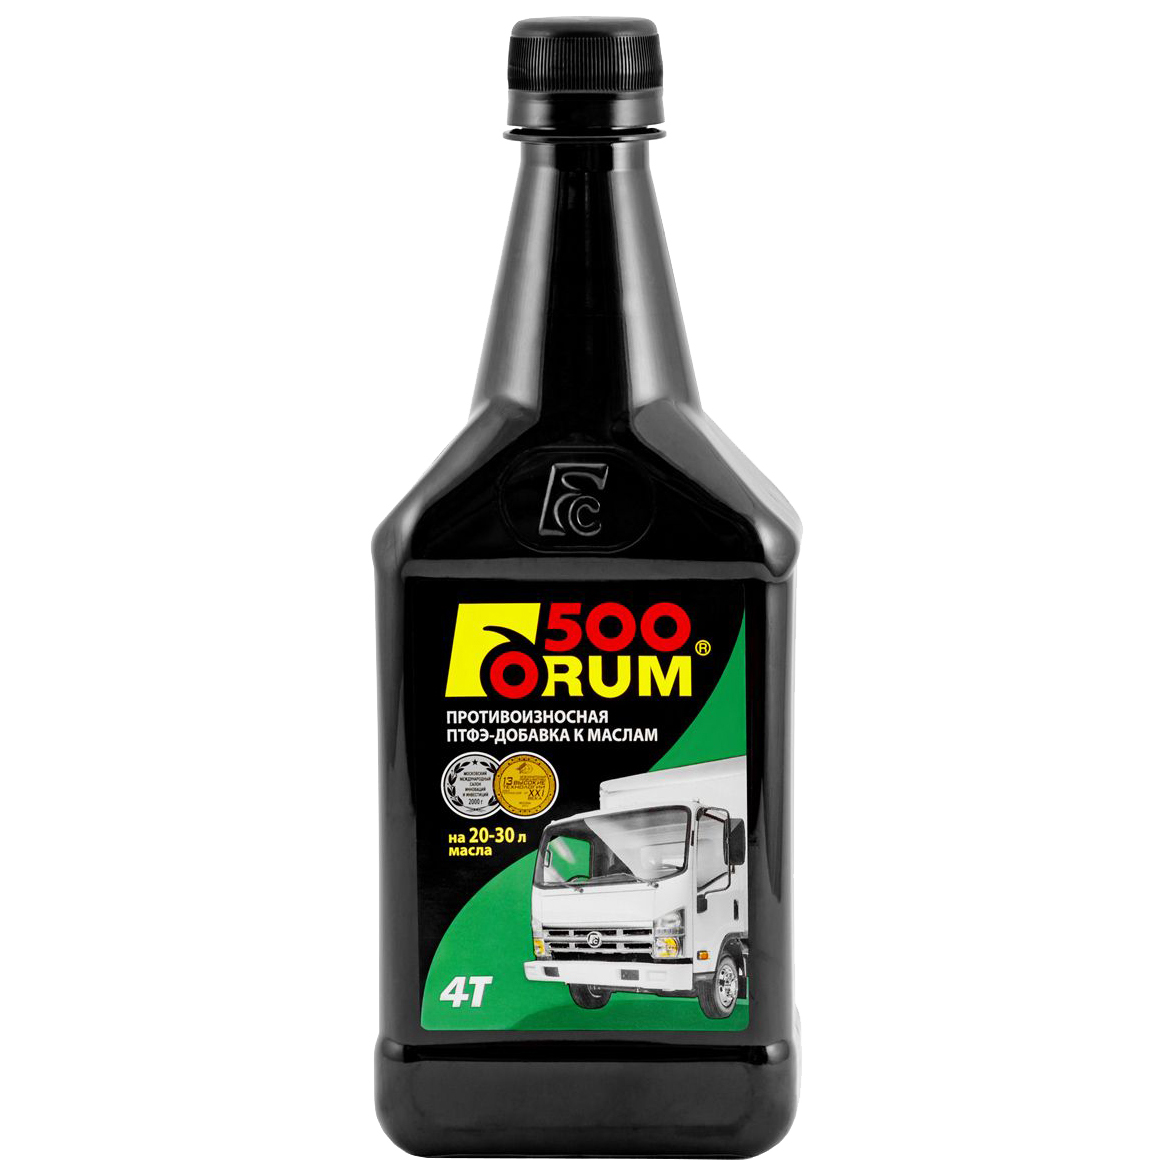 Присадка в масло Владфорум FR523 Форум-500 на 20-30 л масла, 500 мл.